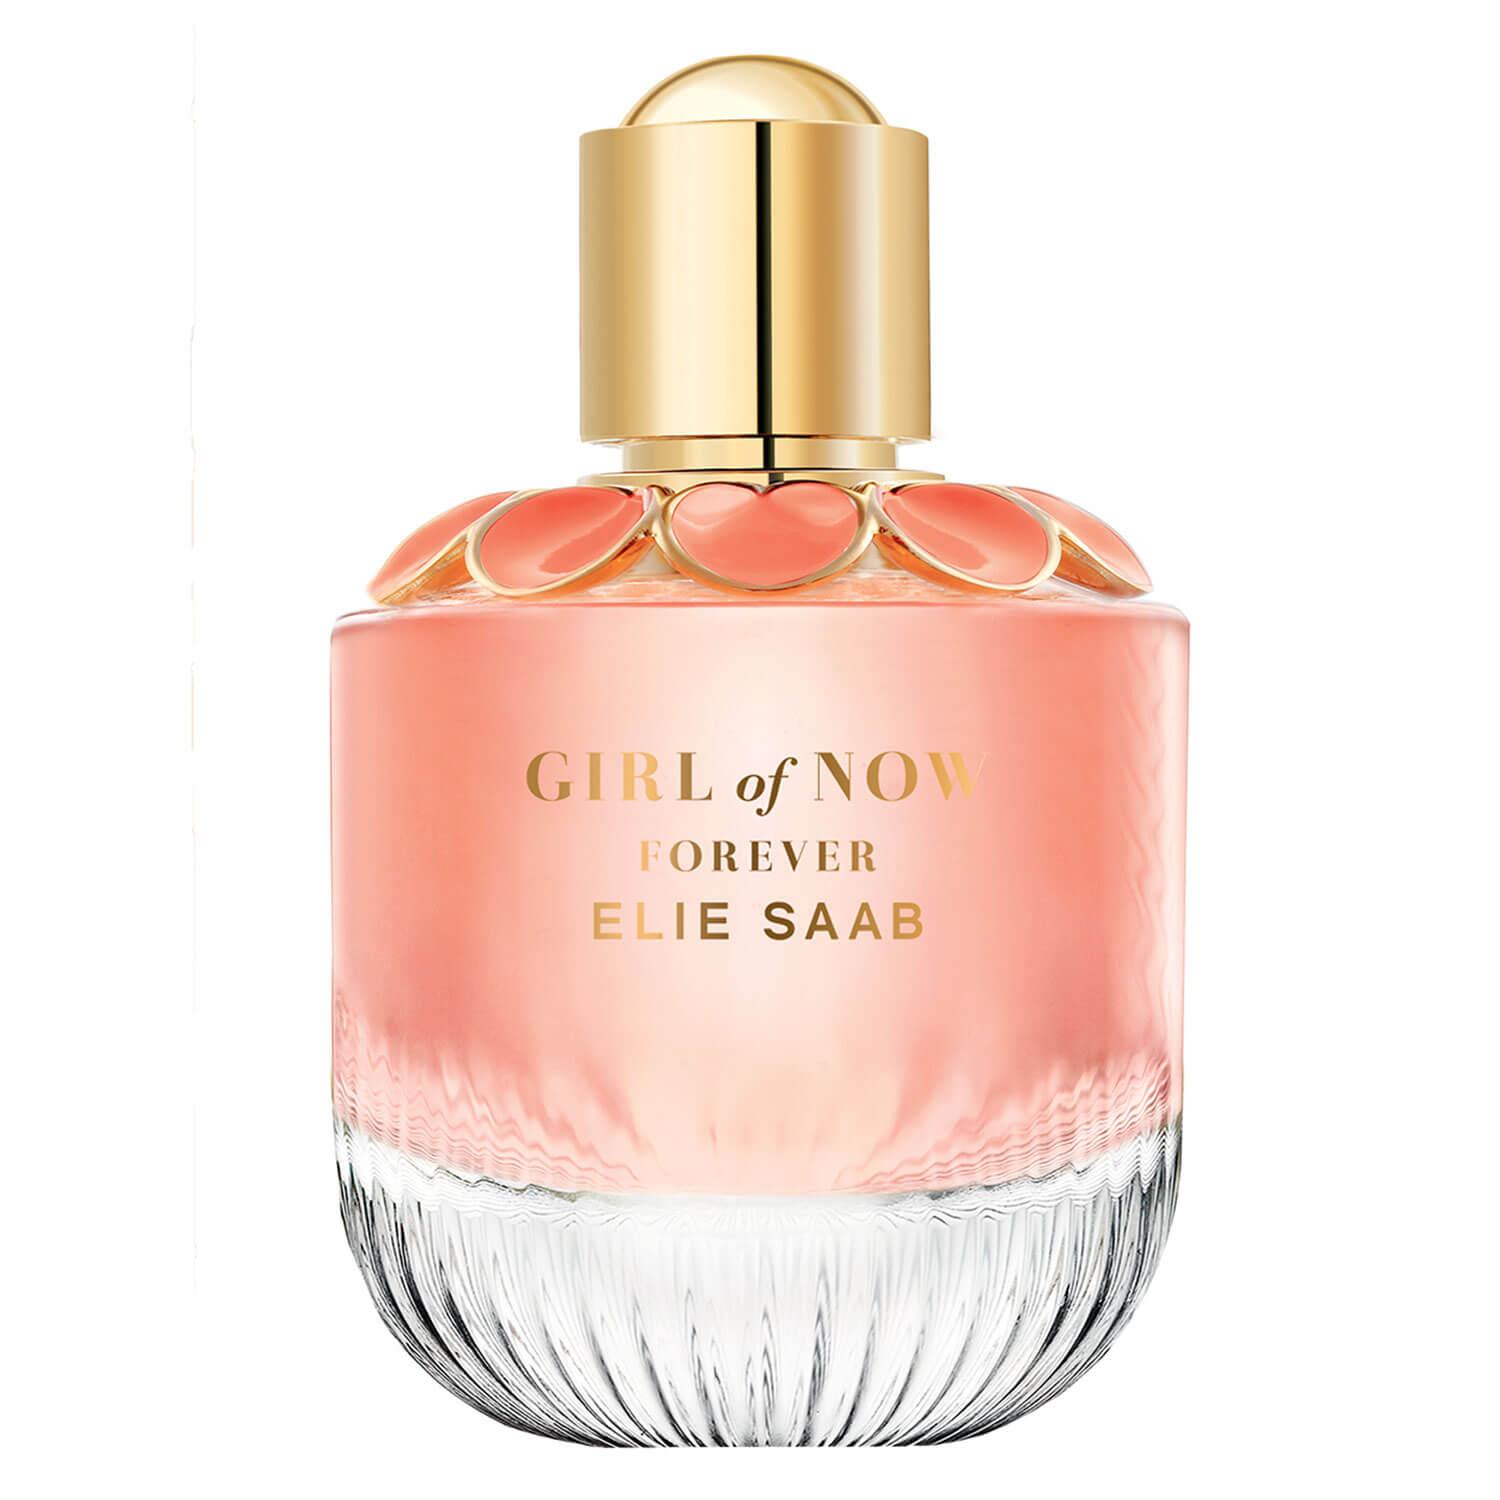 Girl of Now - Forever Eau de Parfum